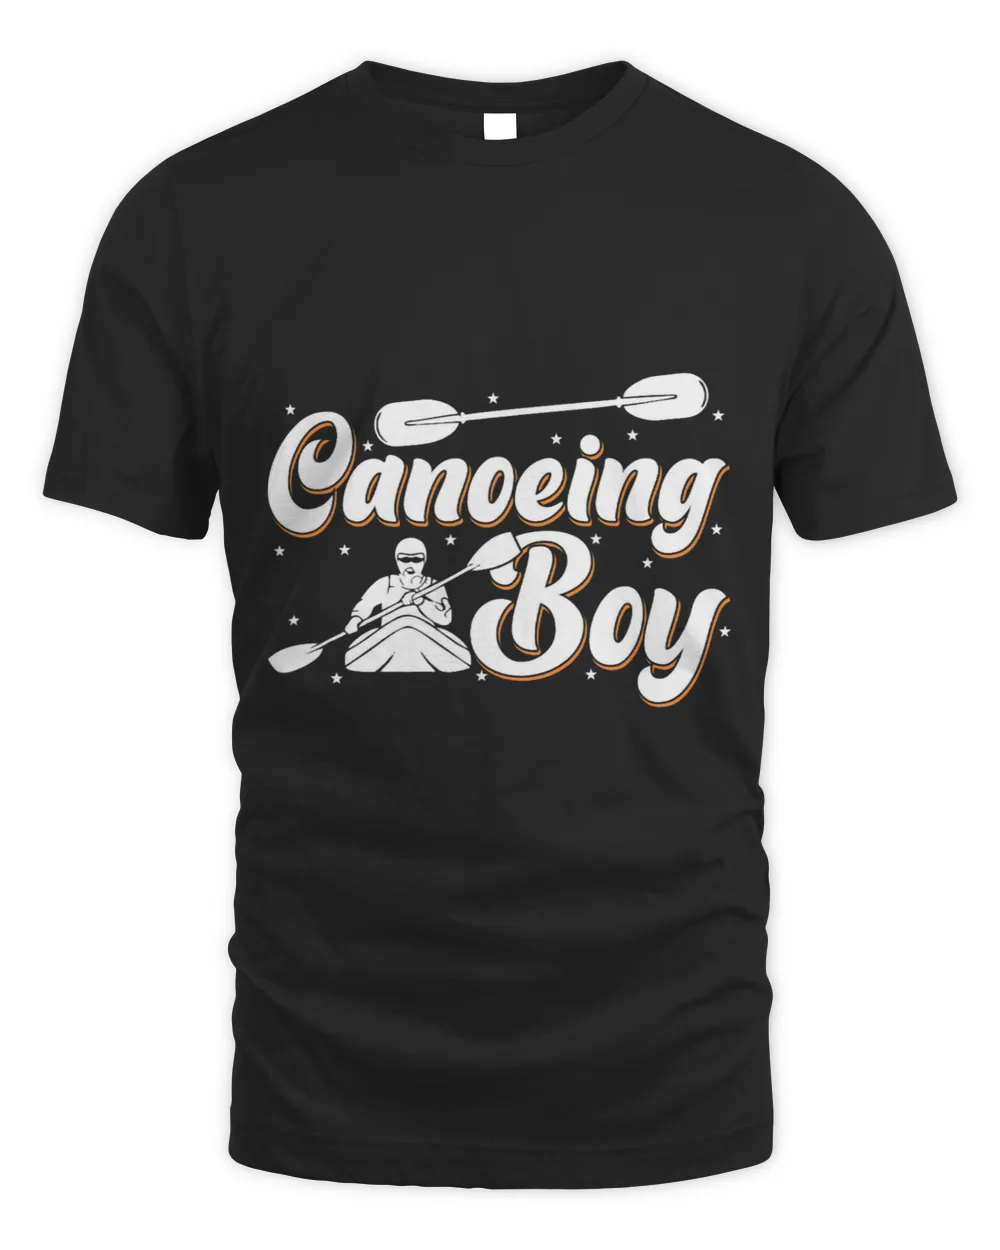 Canoeing Boy